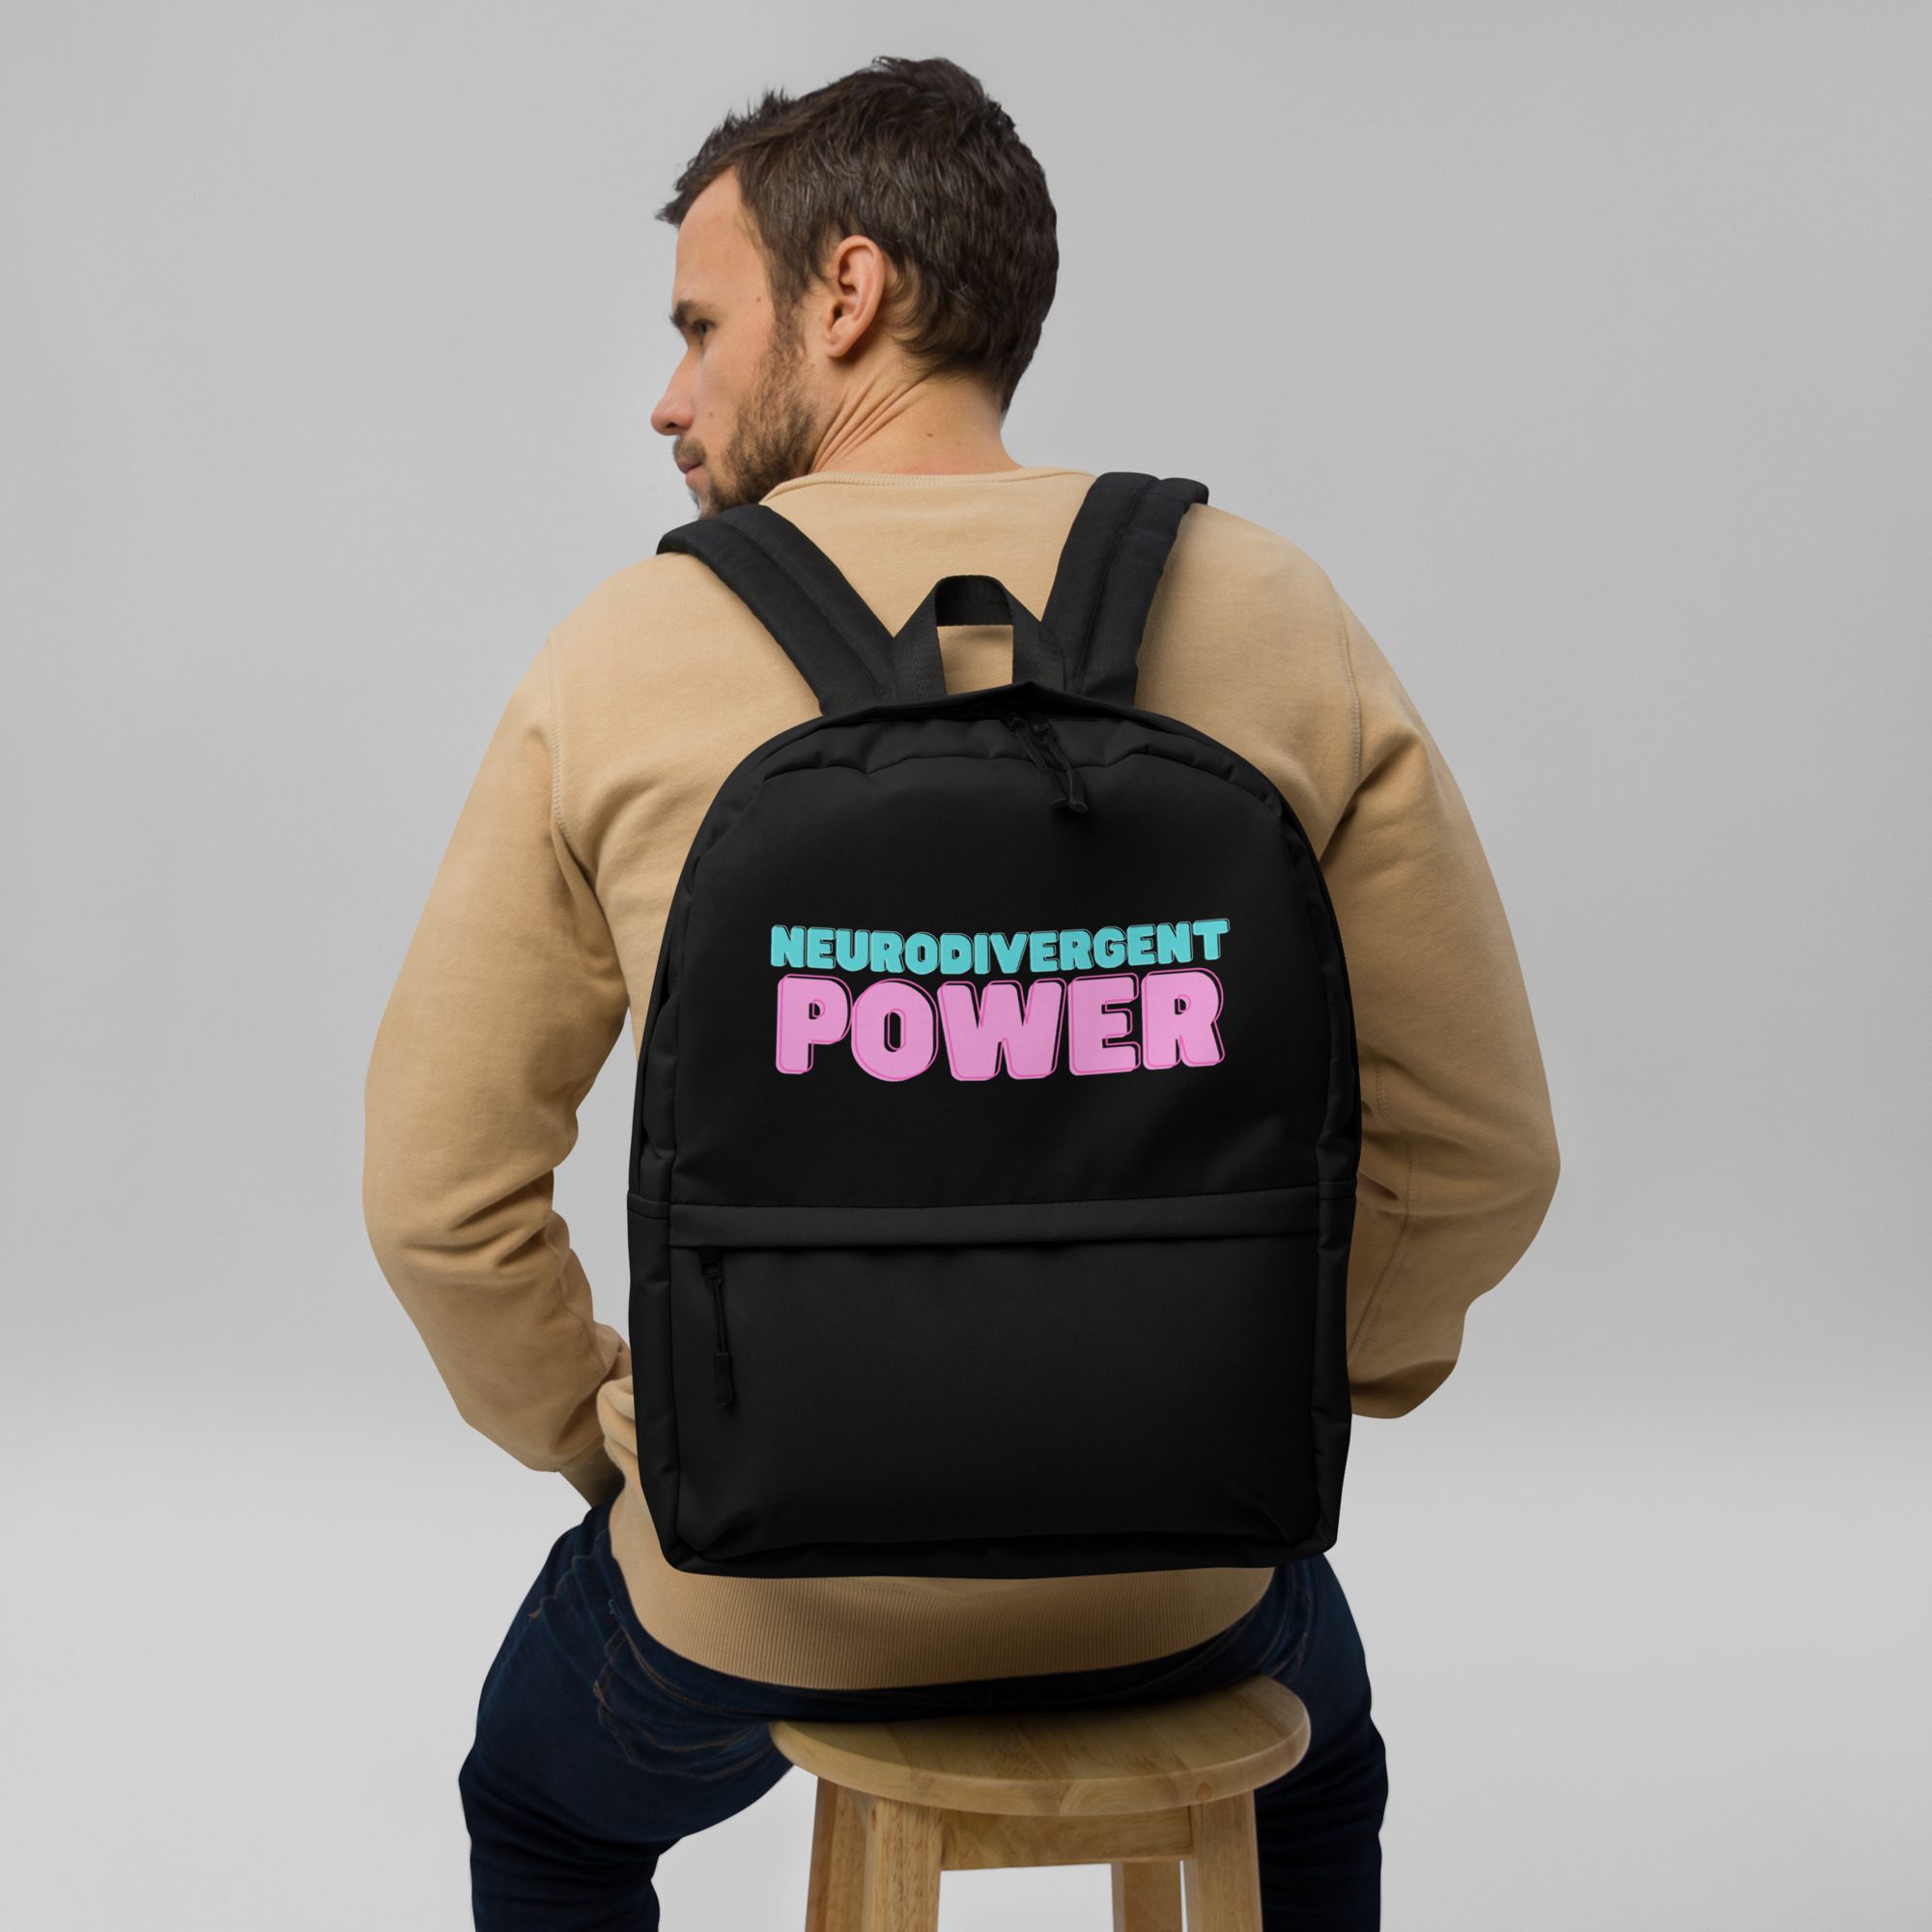 Neurodivergent Power Backpack